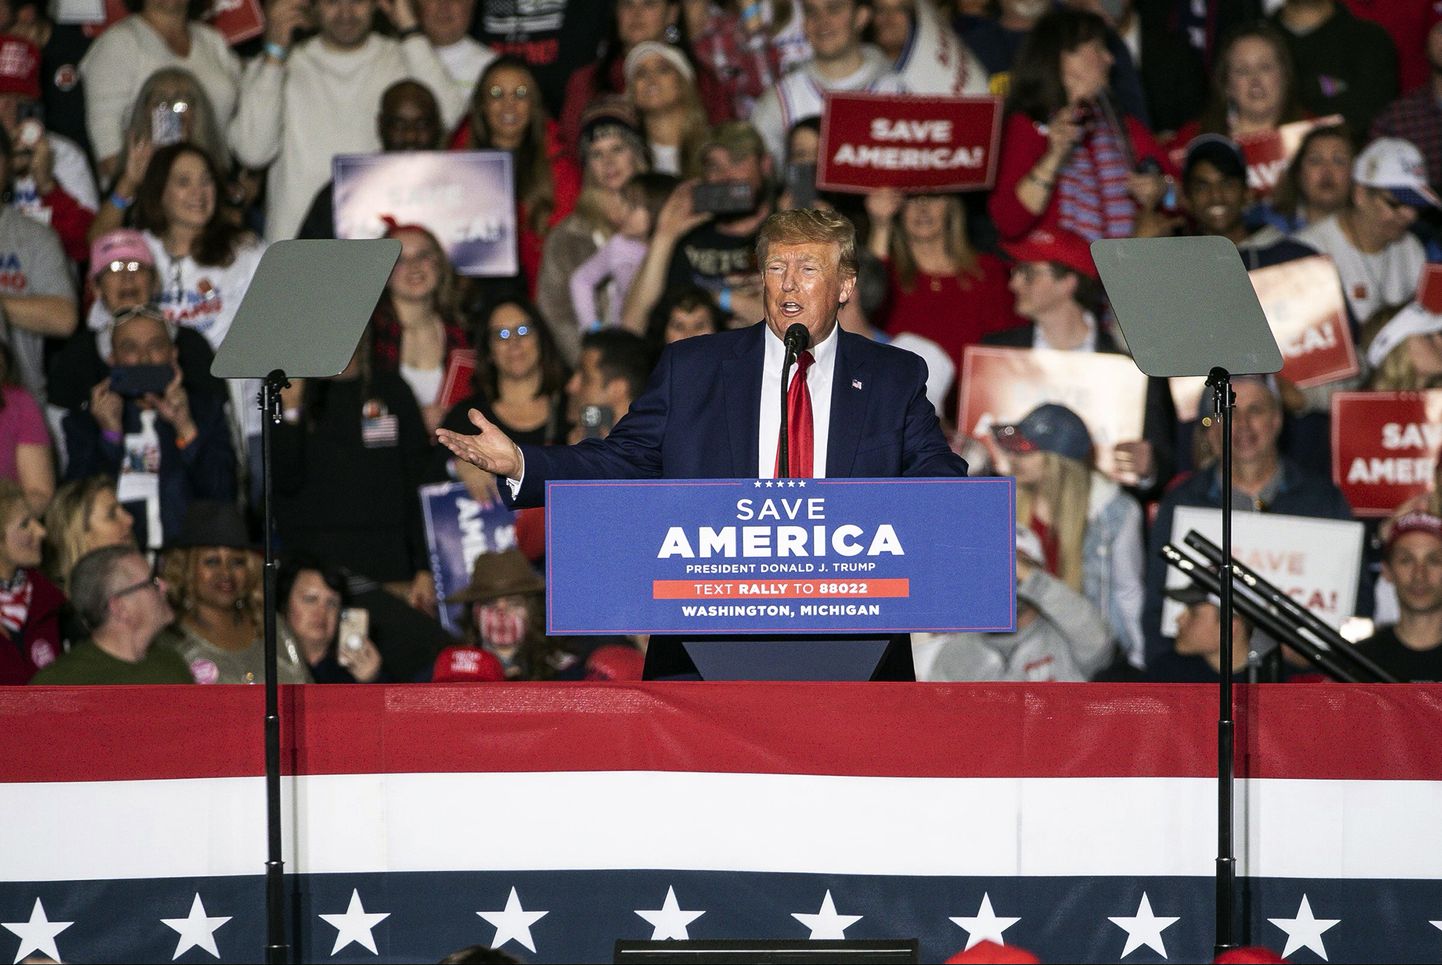 Former President Donald Trump speaks during a rally at the Michigan Stars Sports Center in Washington Township, Mich., Saturday, April 2, 2022. (Junfu Han/Detroit Free Press via AP)